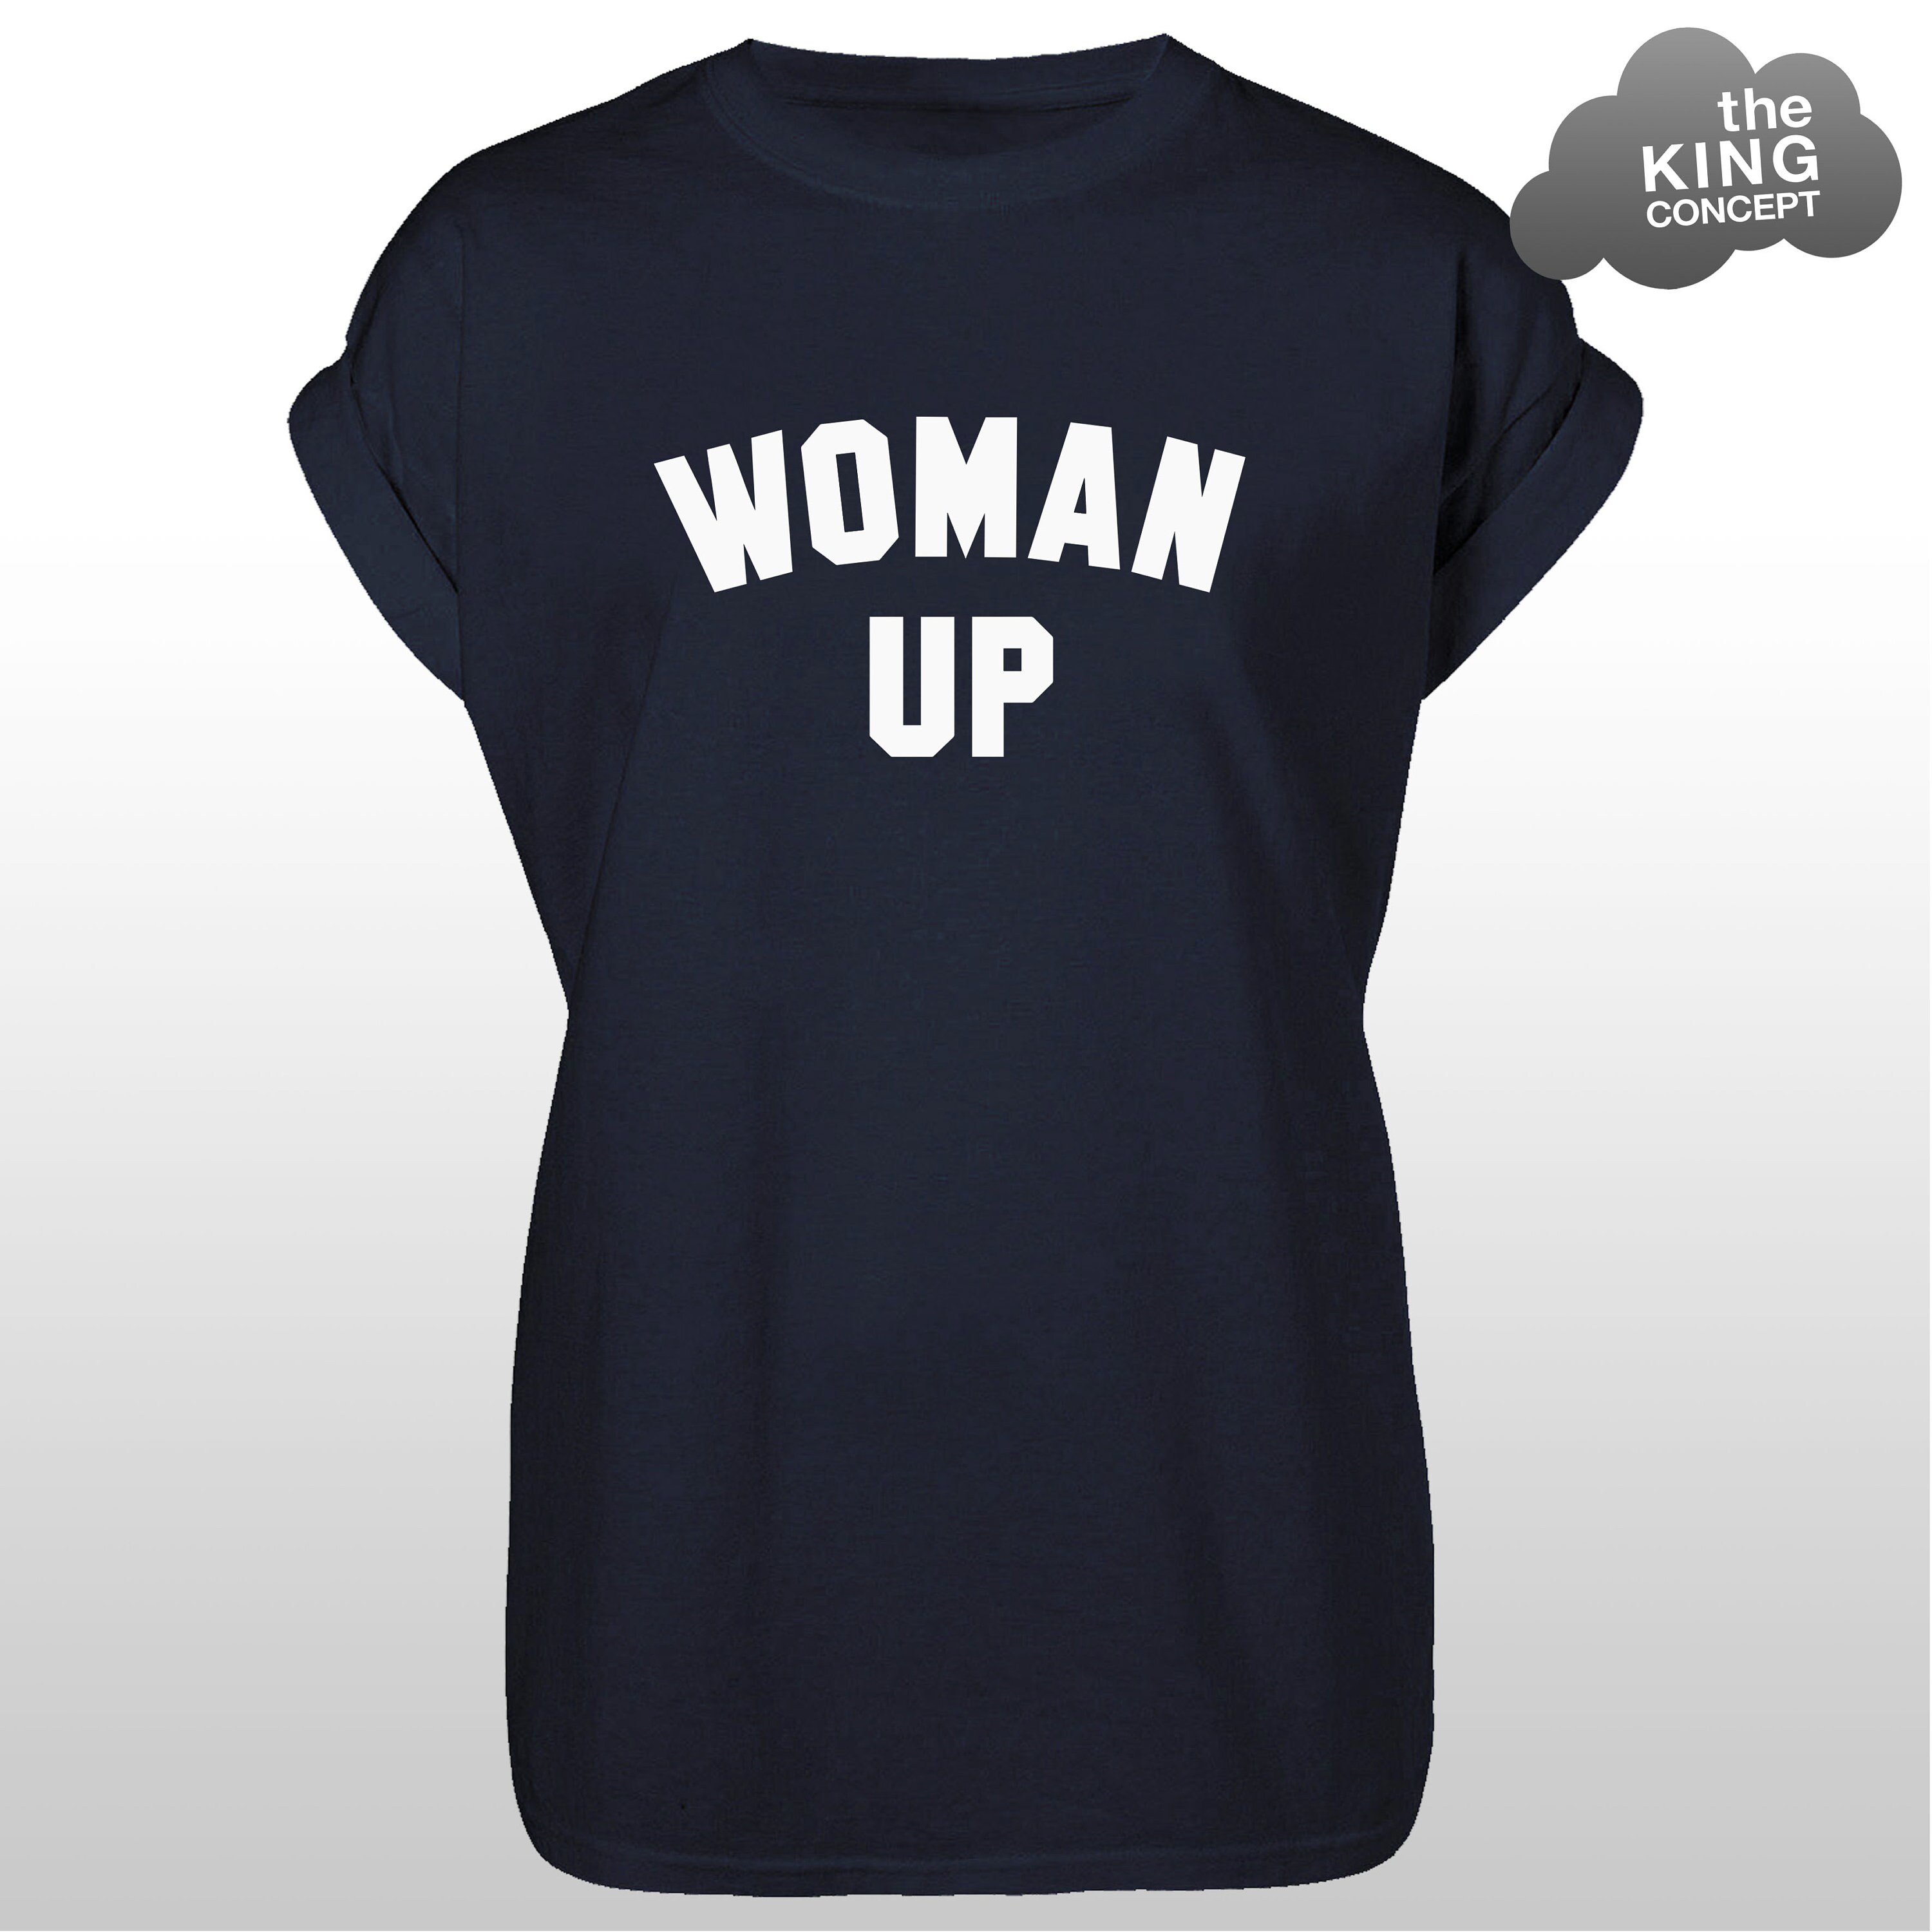 Discover Woman Up T-Shirt Women Up Shirt Feminist Tee Top Womens March Slogan Femanist Future is Female